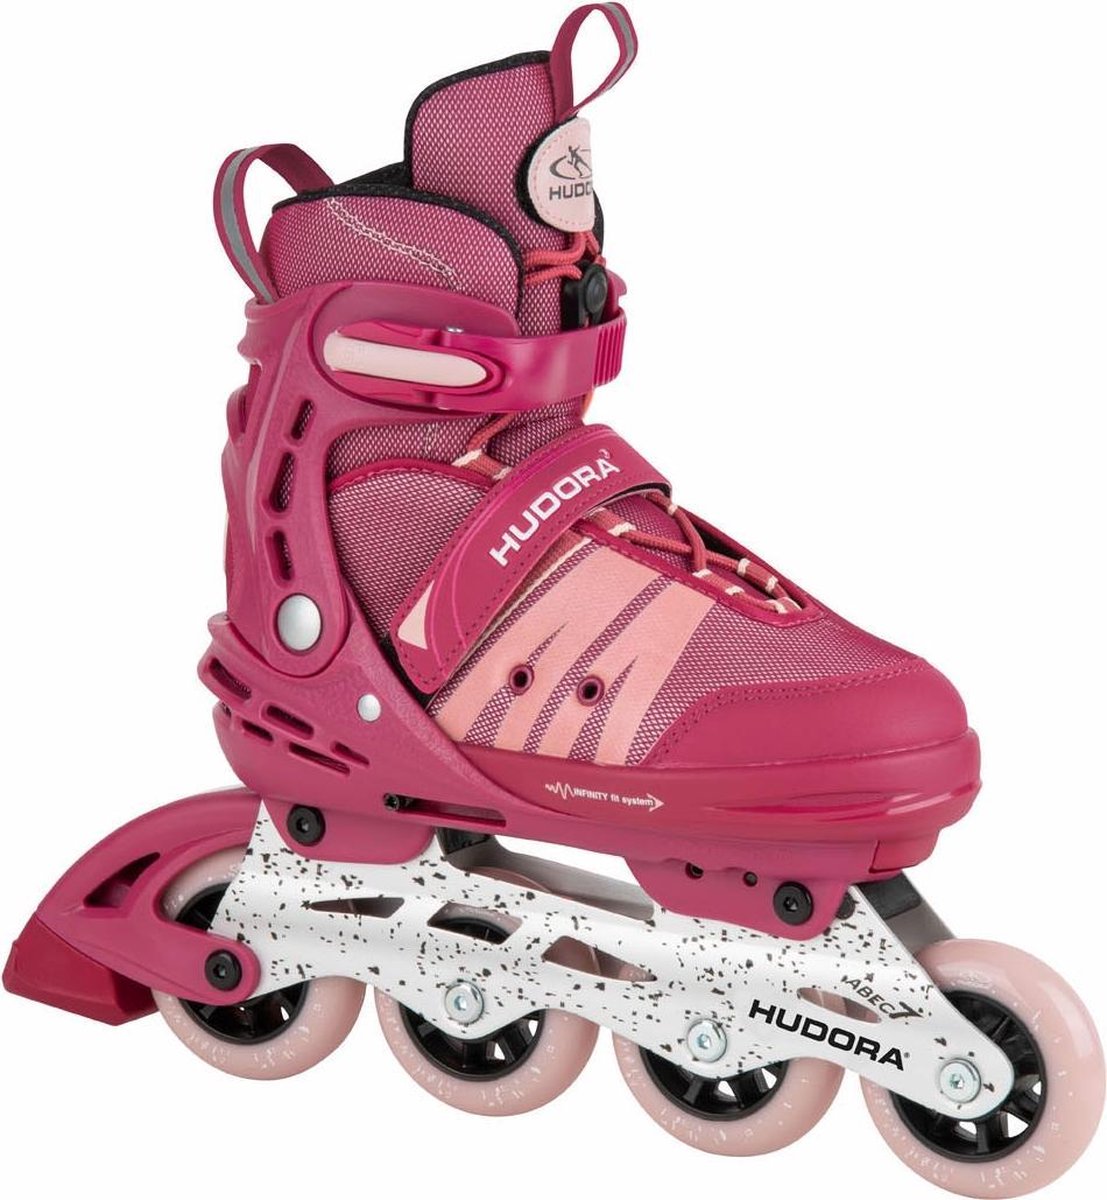 HUDORA Inline Skates Comfort Strong Berry Size 35-40 Soft Boot Inline Roller Skates Adjustable in Length and Width